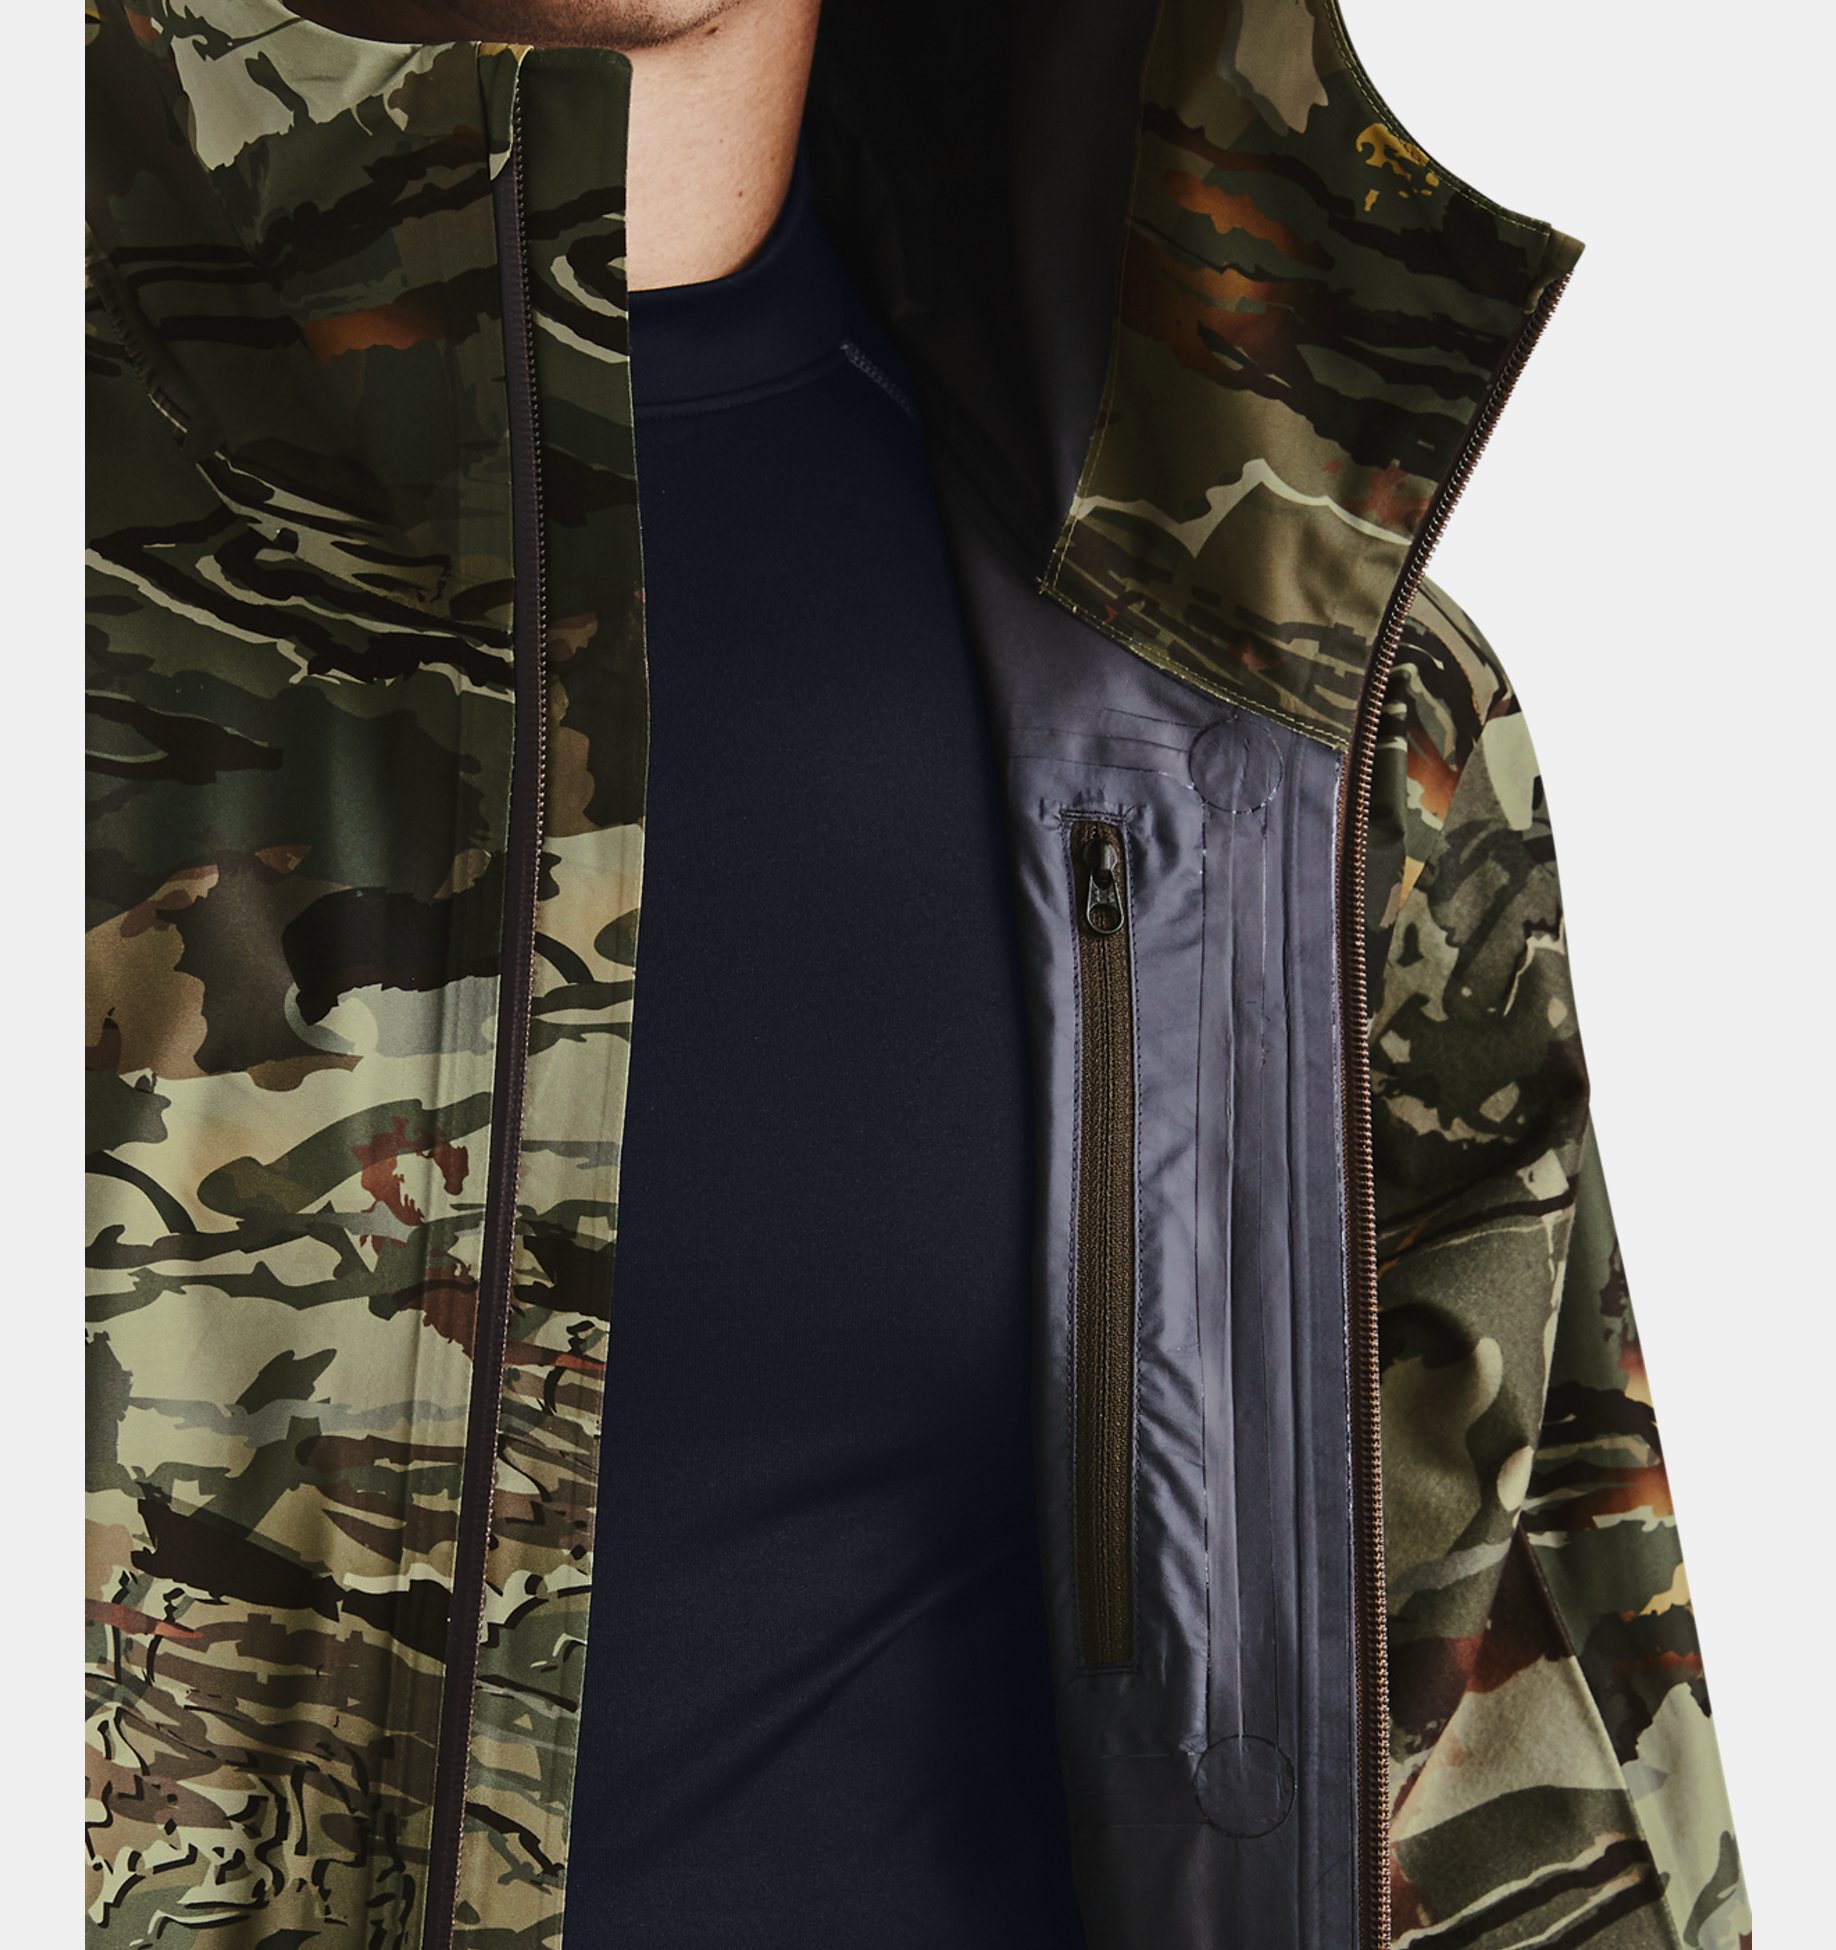 Men's GORE-TEX® Essential Hybrid Jacket